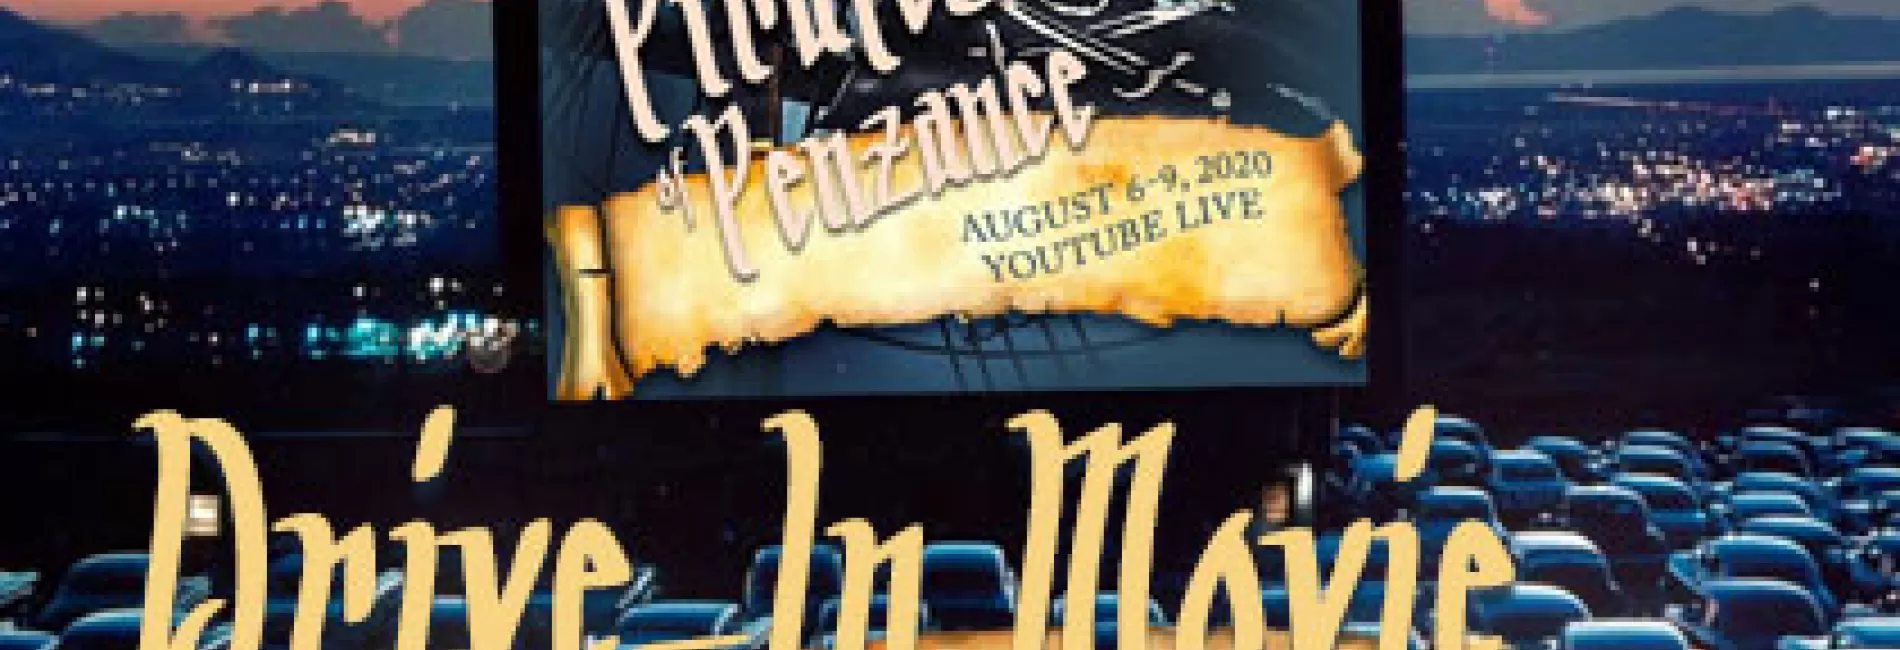 Drive-In Live Ensemble 8/6/20 The Pirates of Penzance - Live Stream